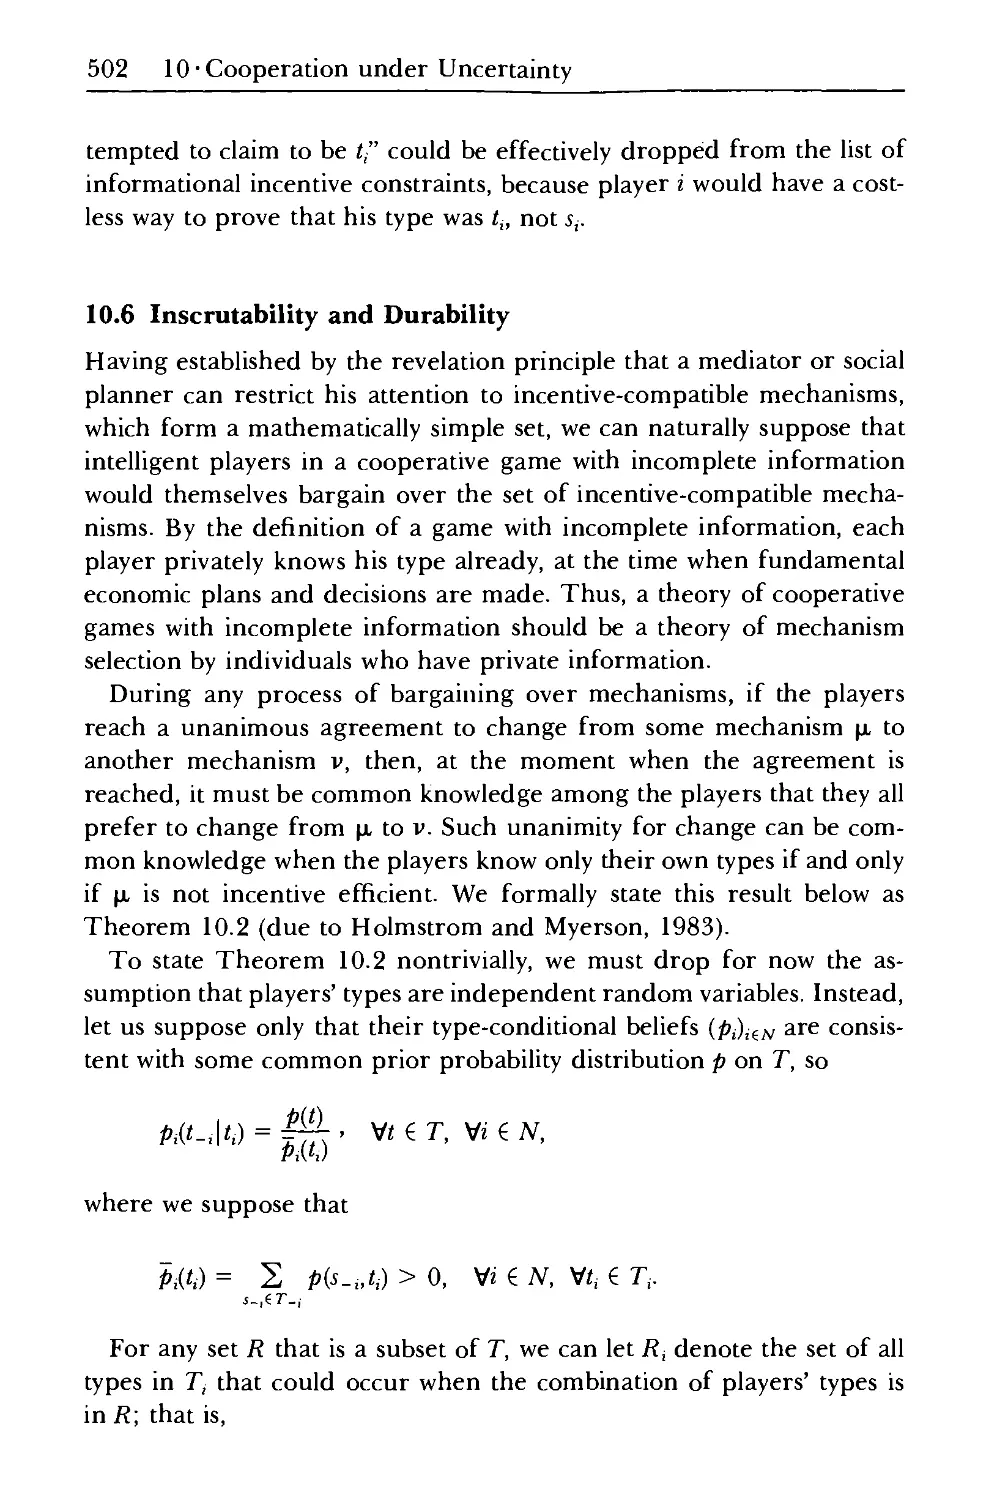 10.6 Inscrutability and Durability